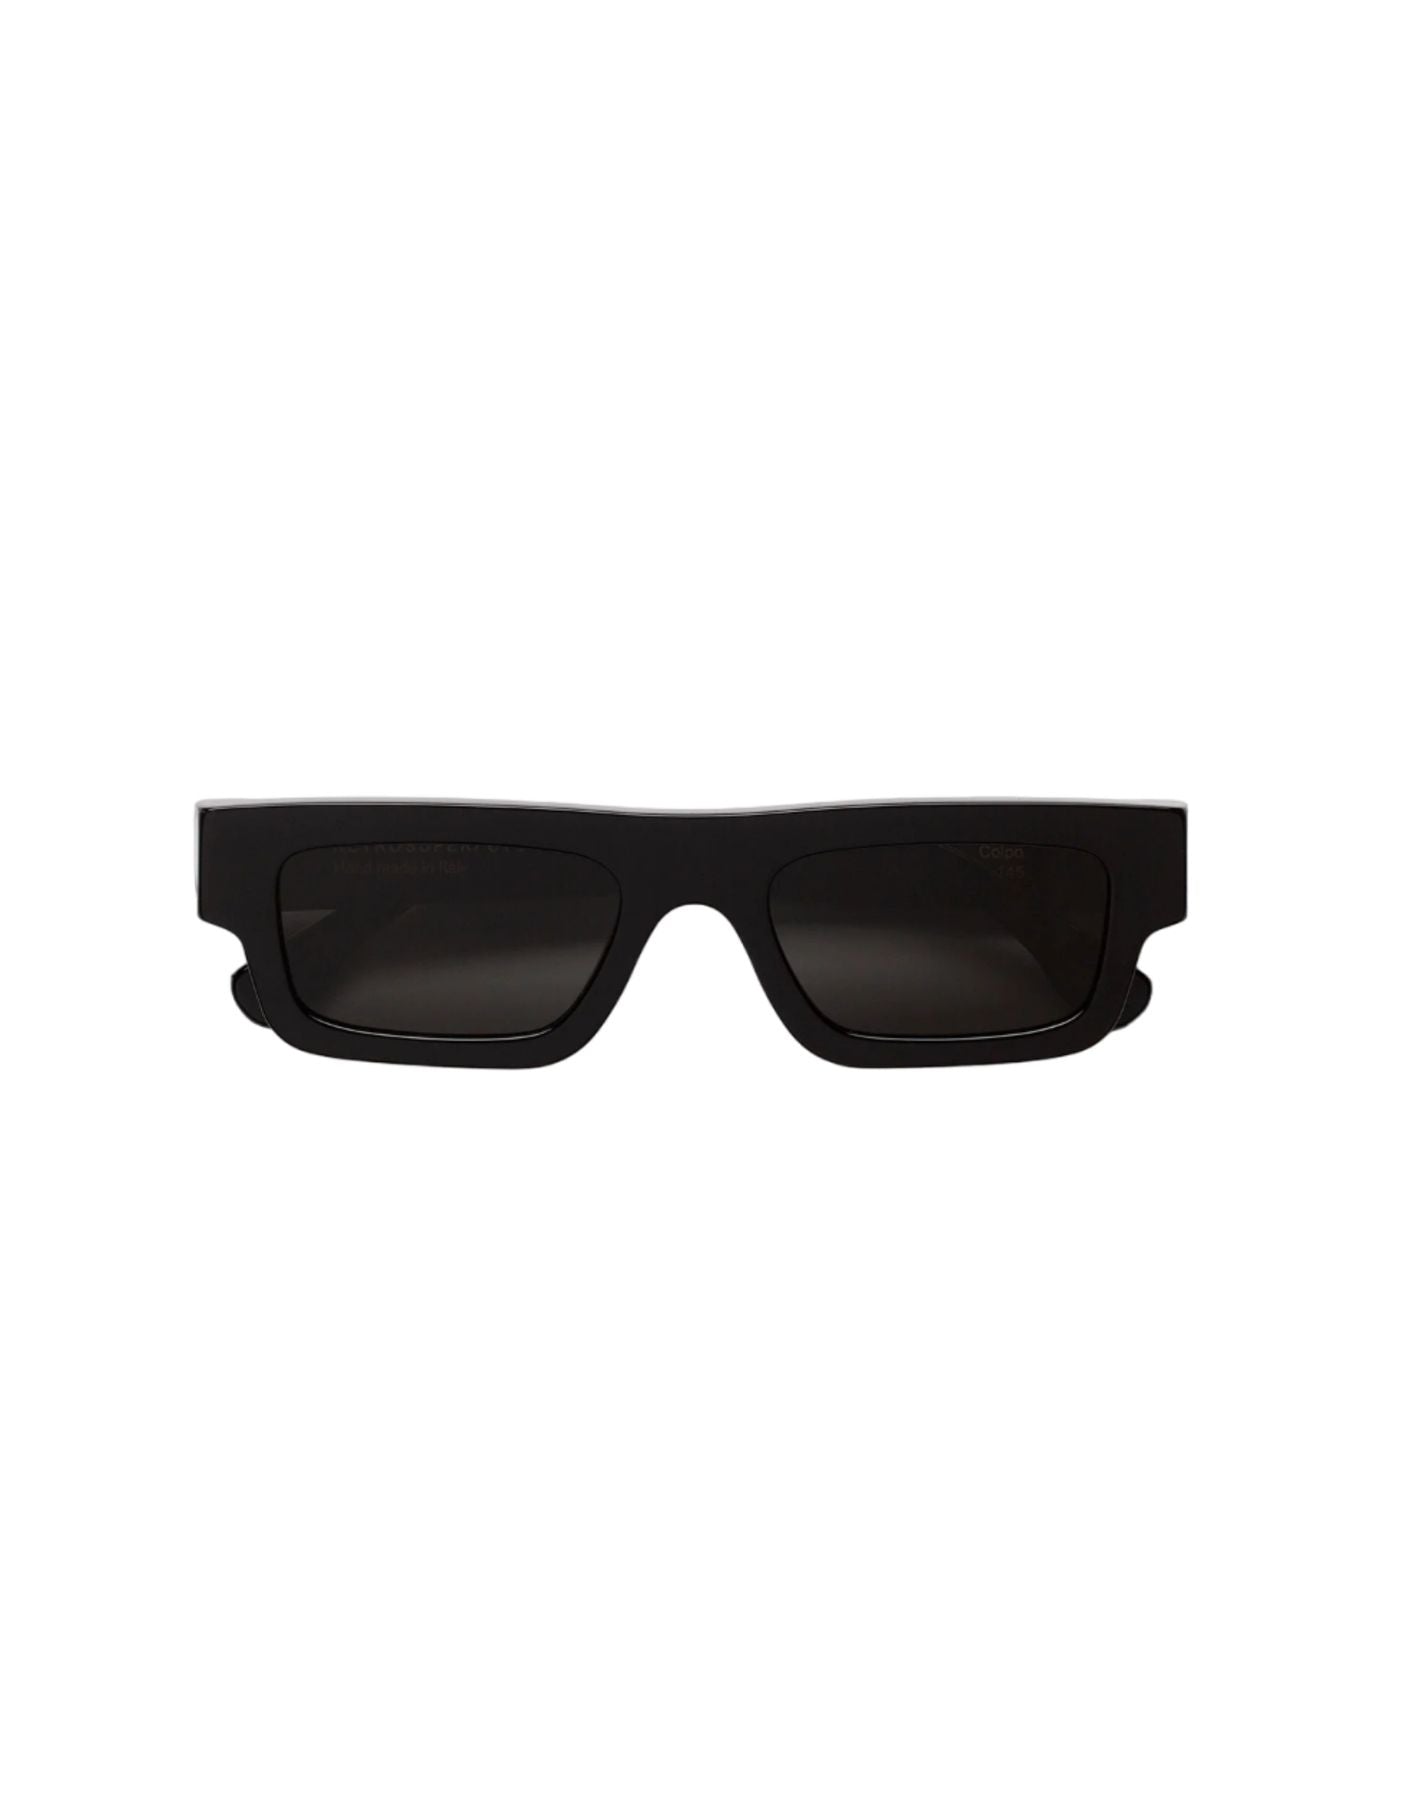 Gafas de sol Unisex Colpo Black ZW5 RetroSuperfuture